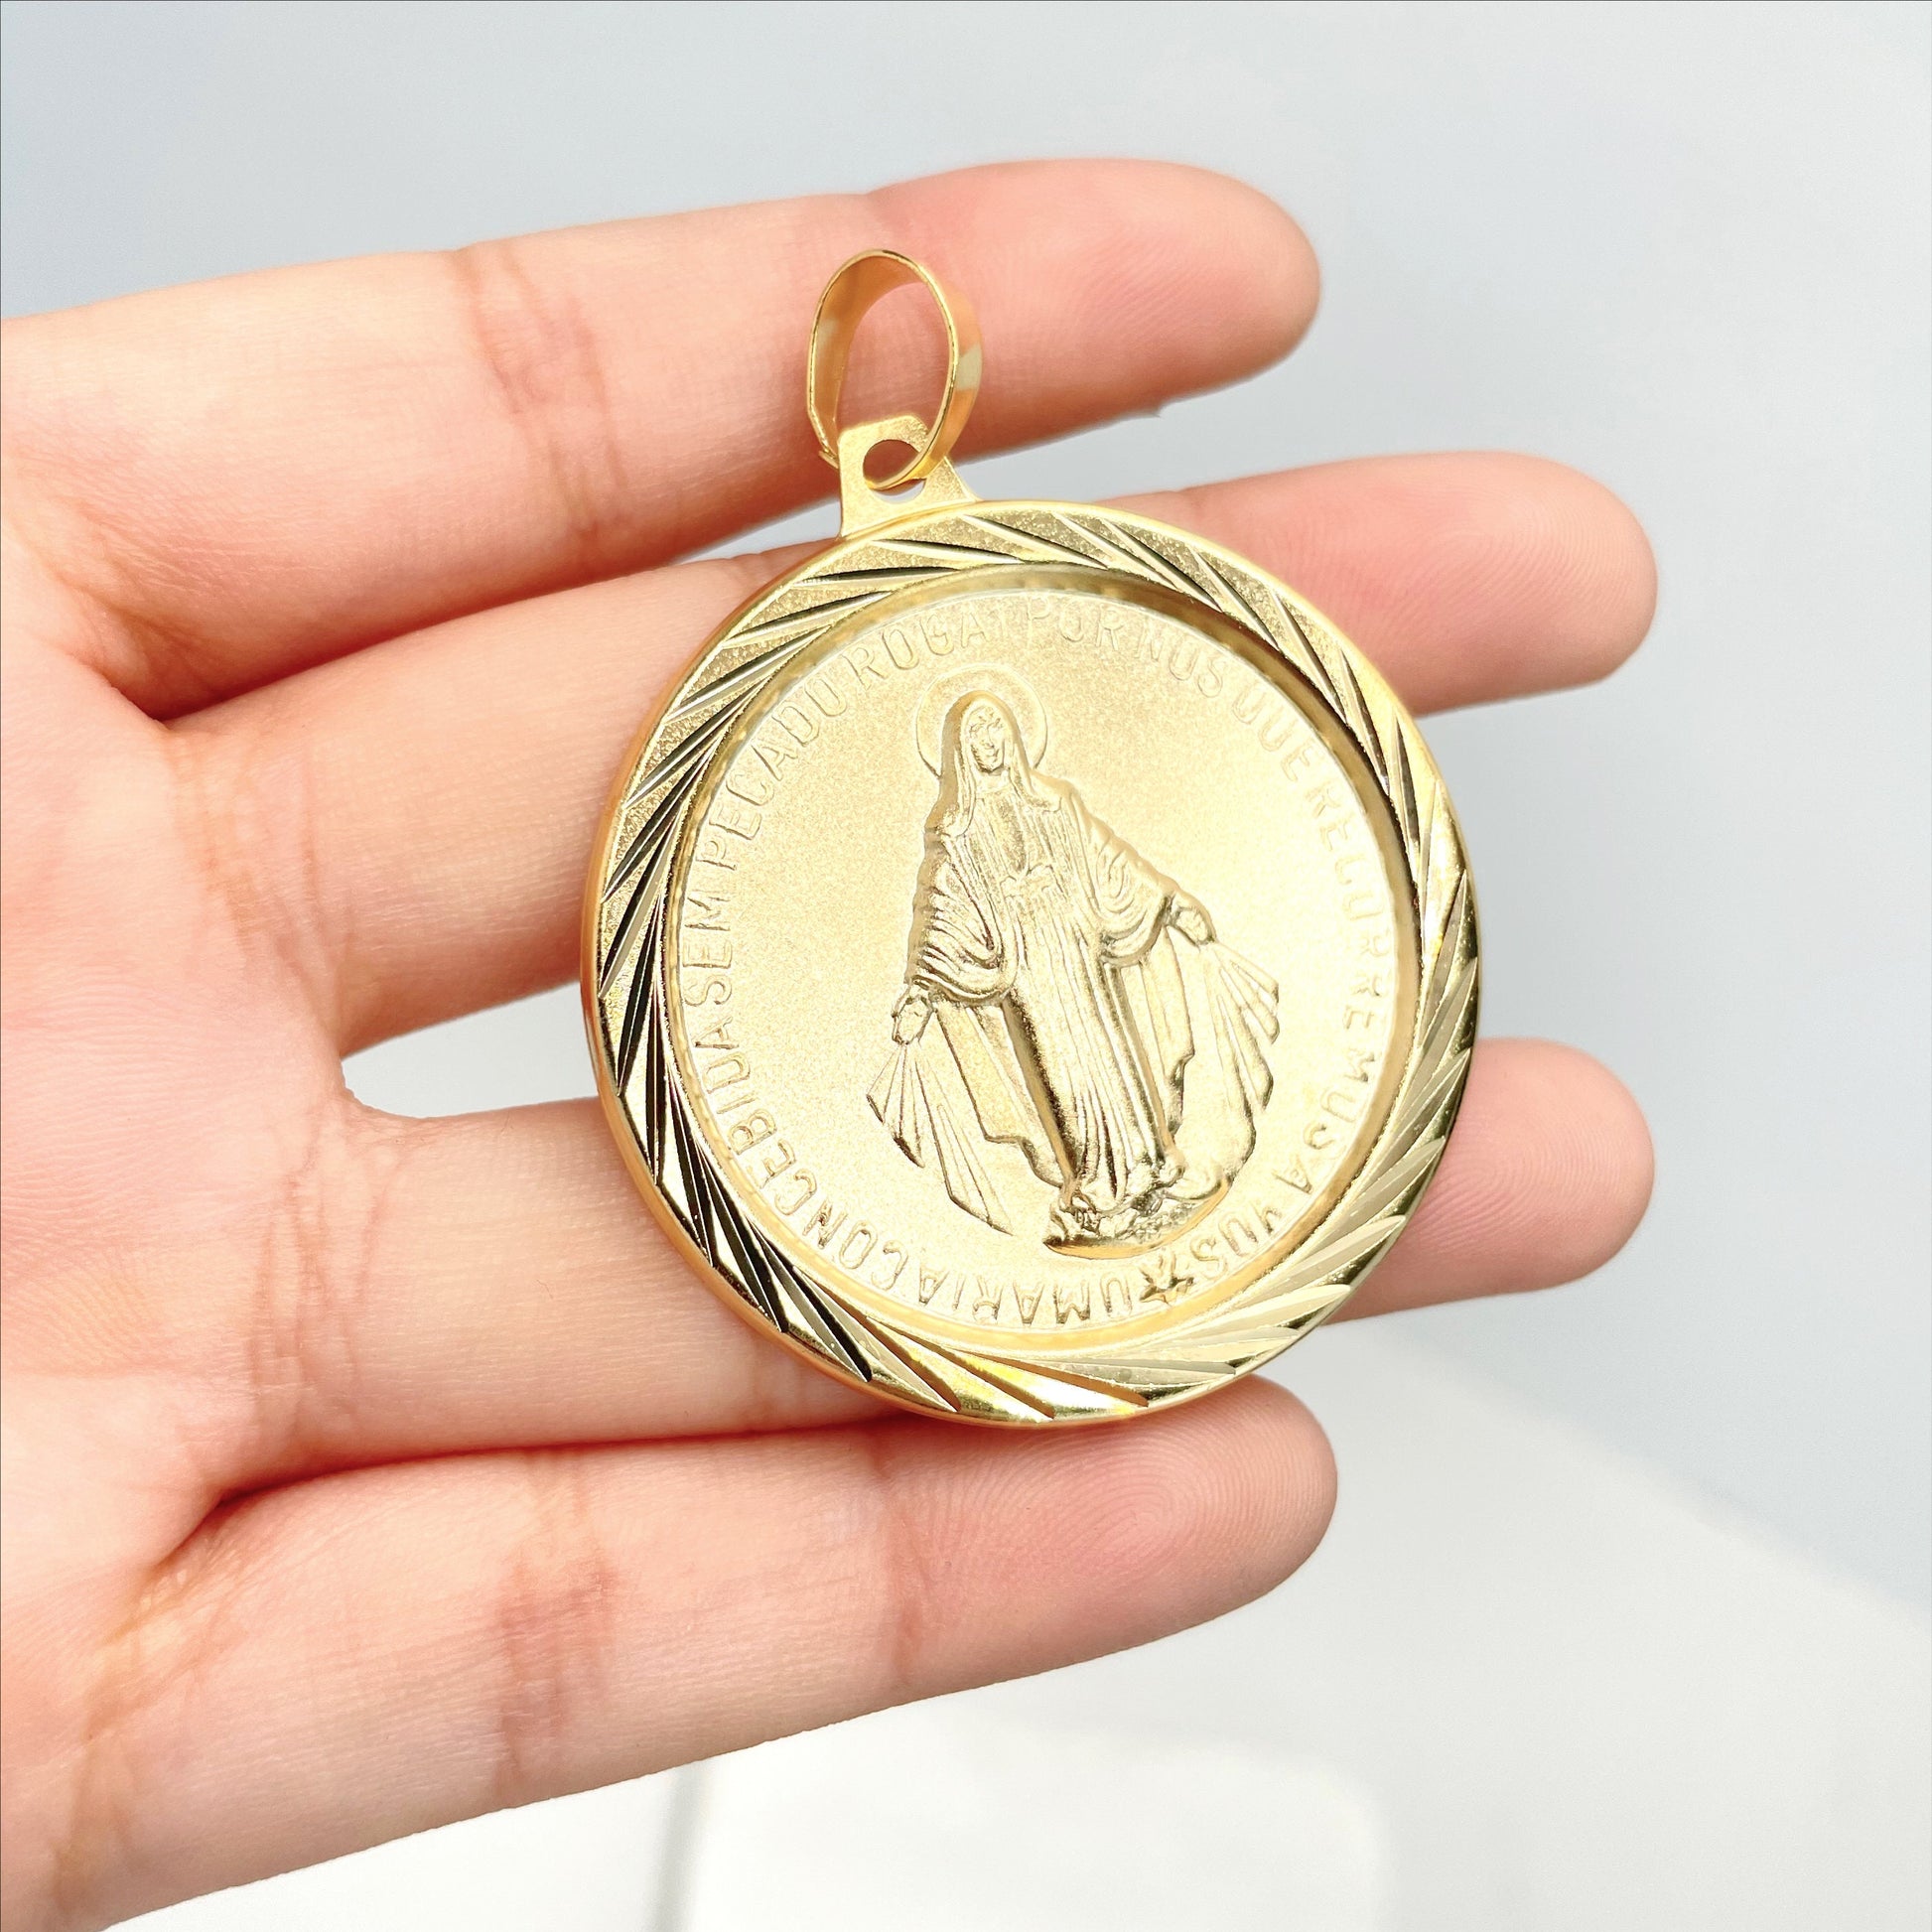 Miraculous Virgin Medal, Medal Pendant Charm